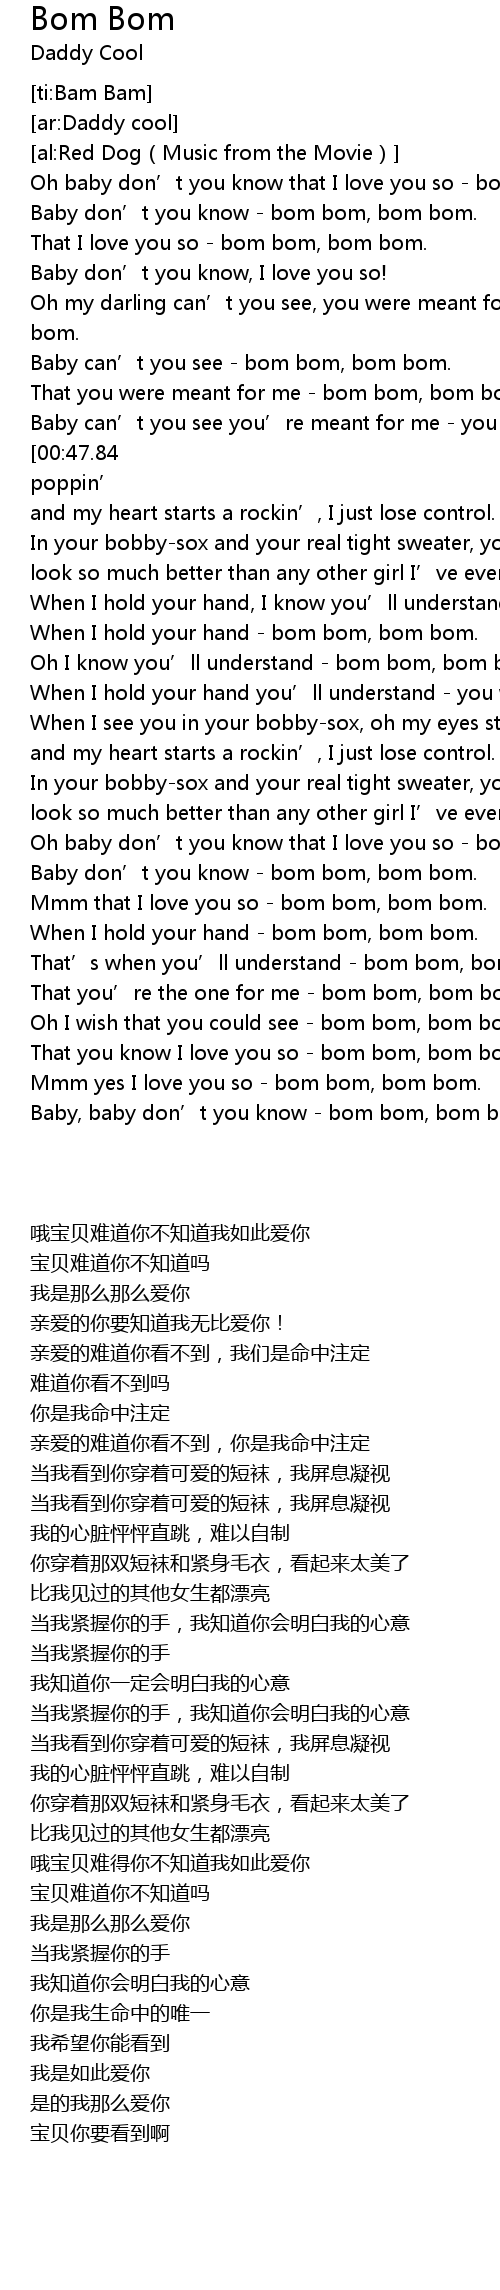 Bom Bom Lyrics Follow Lyrics